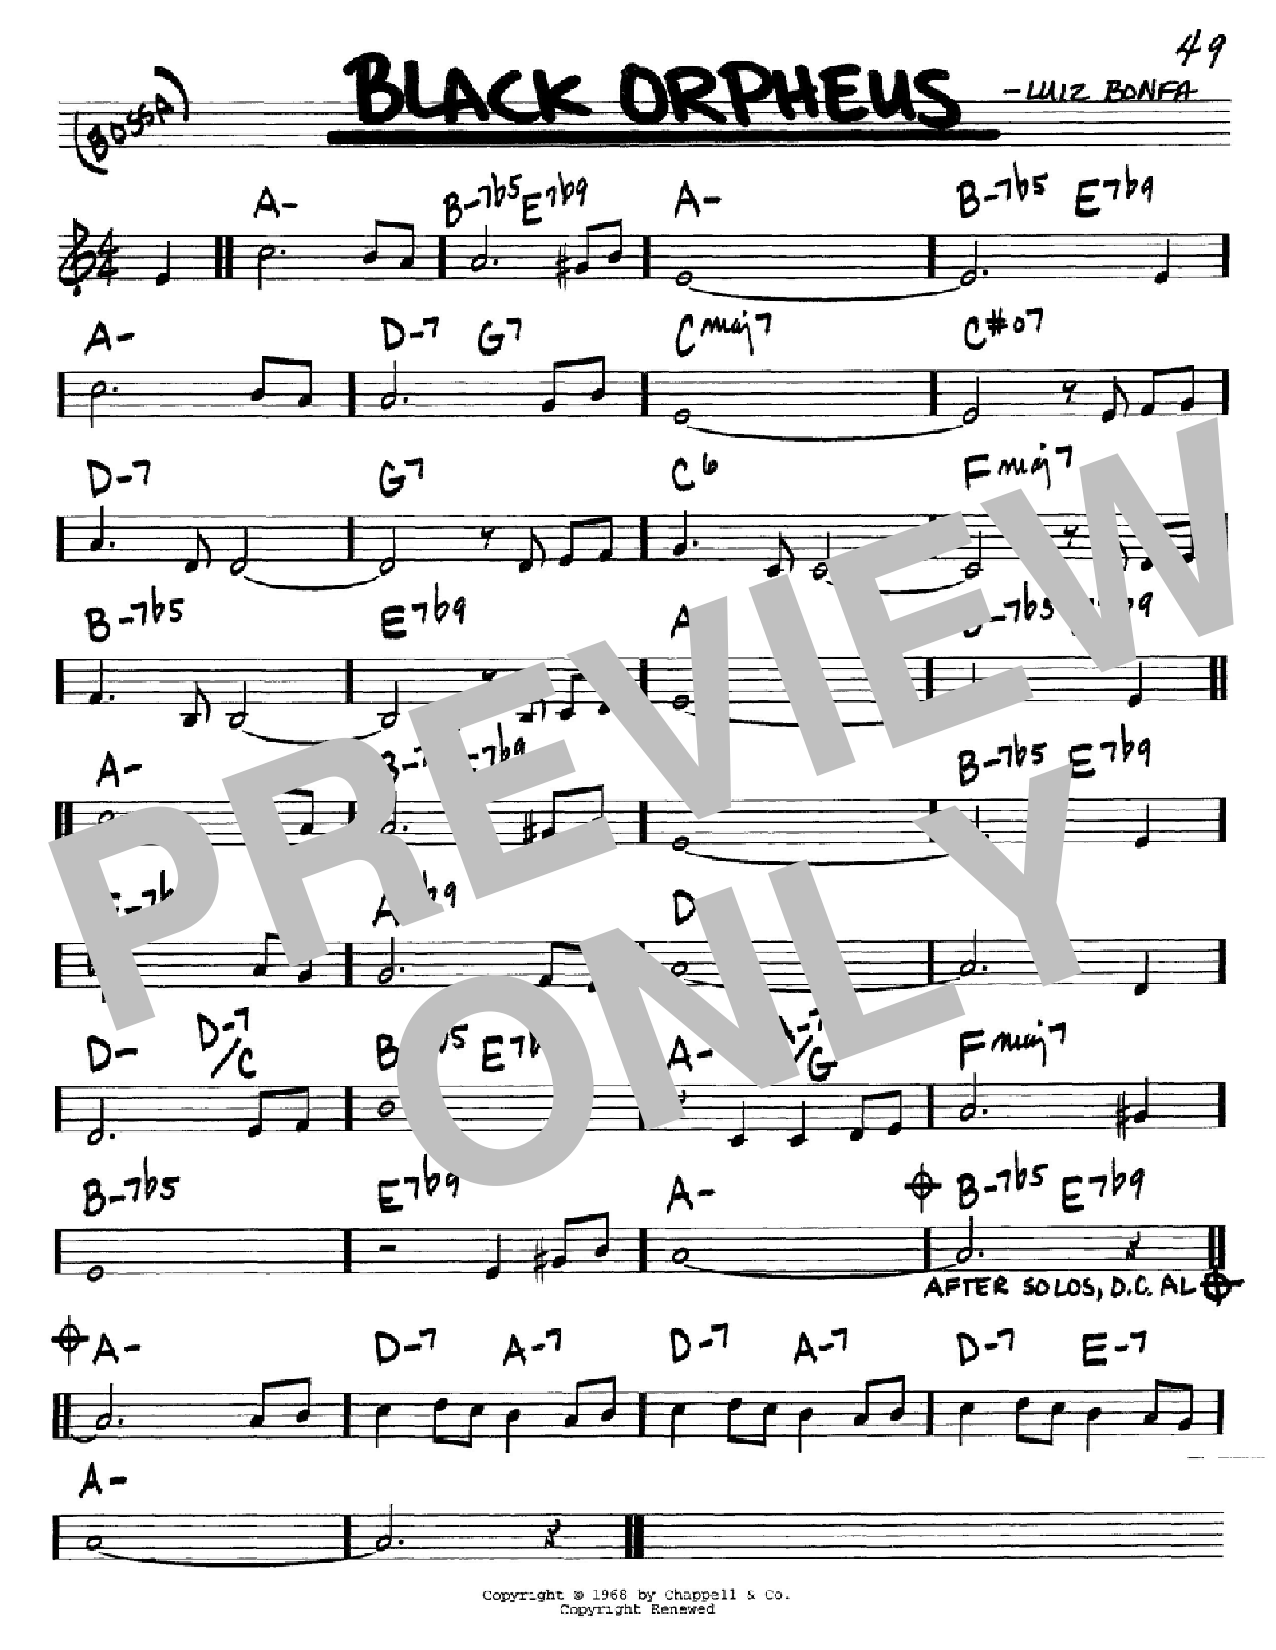 Luiz Bonfa Black Orpheus Sheet Music Notes & Chords for Guitar Tab - Download or Print PDF